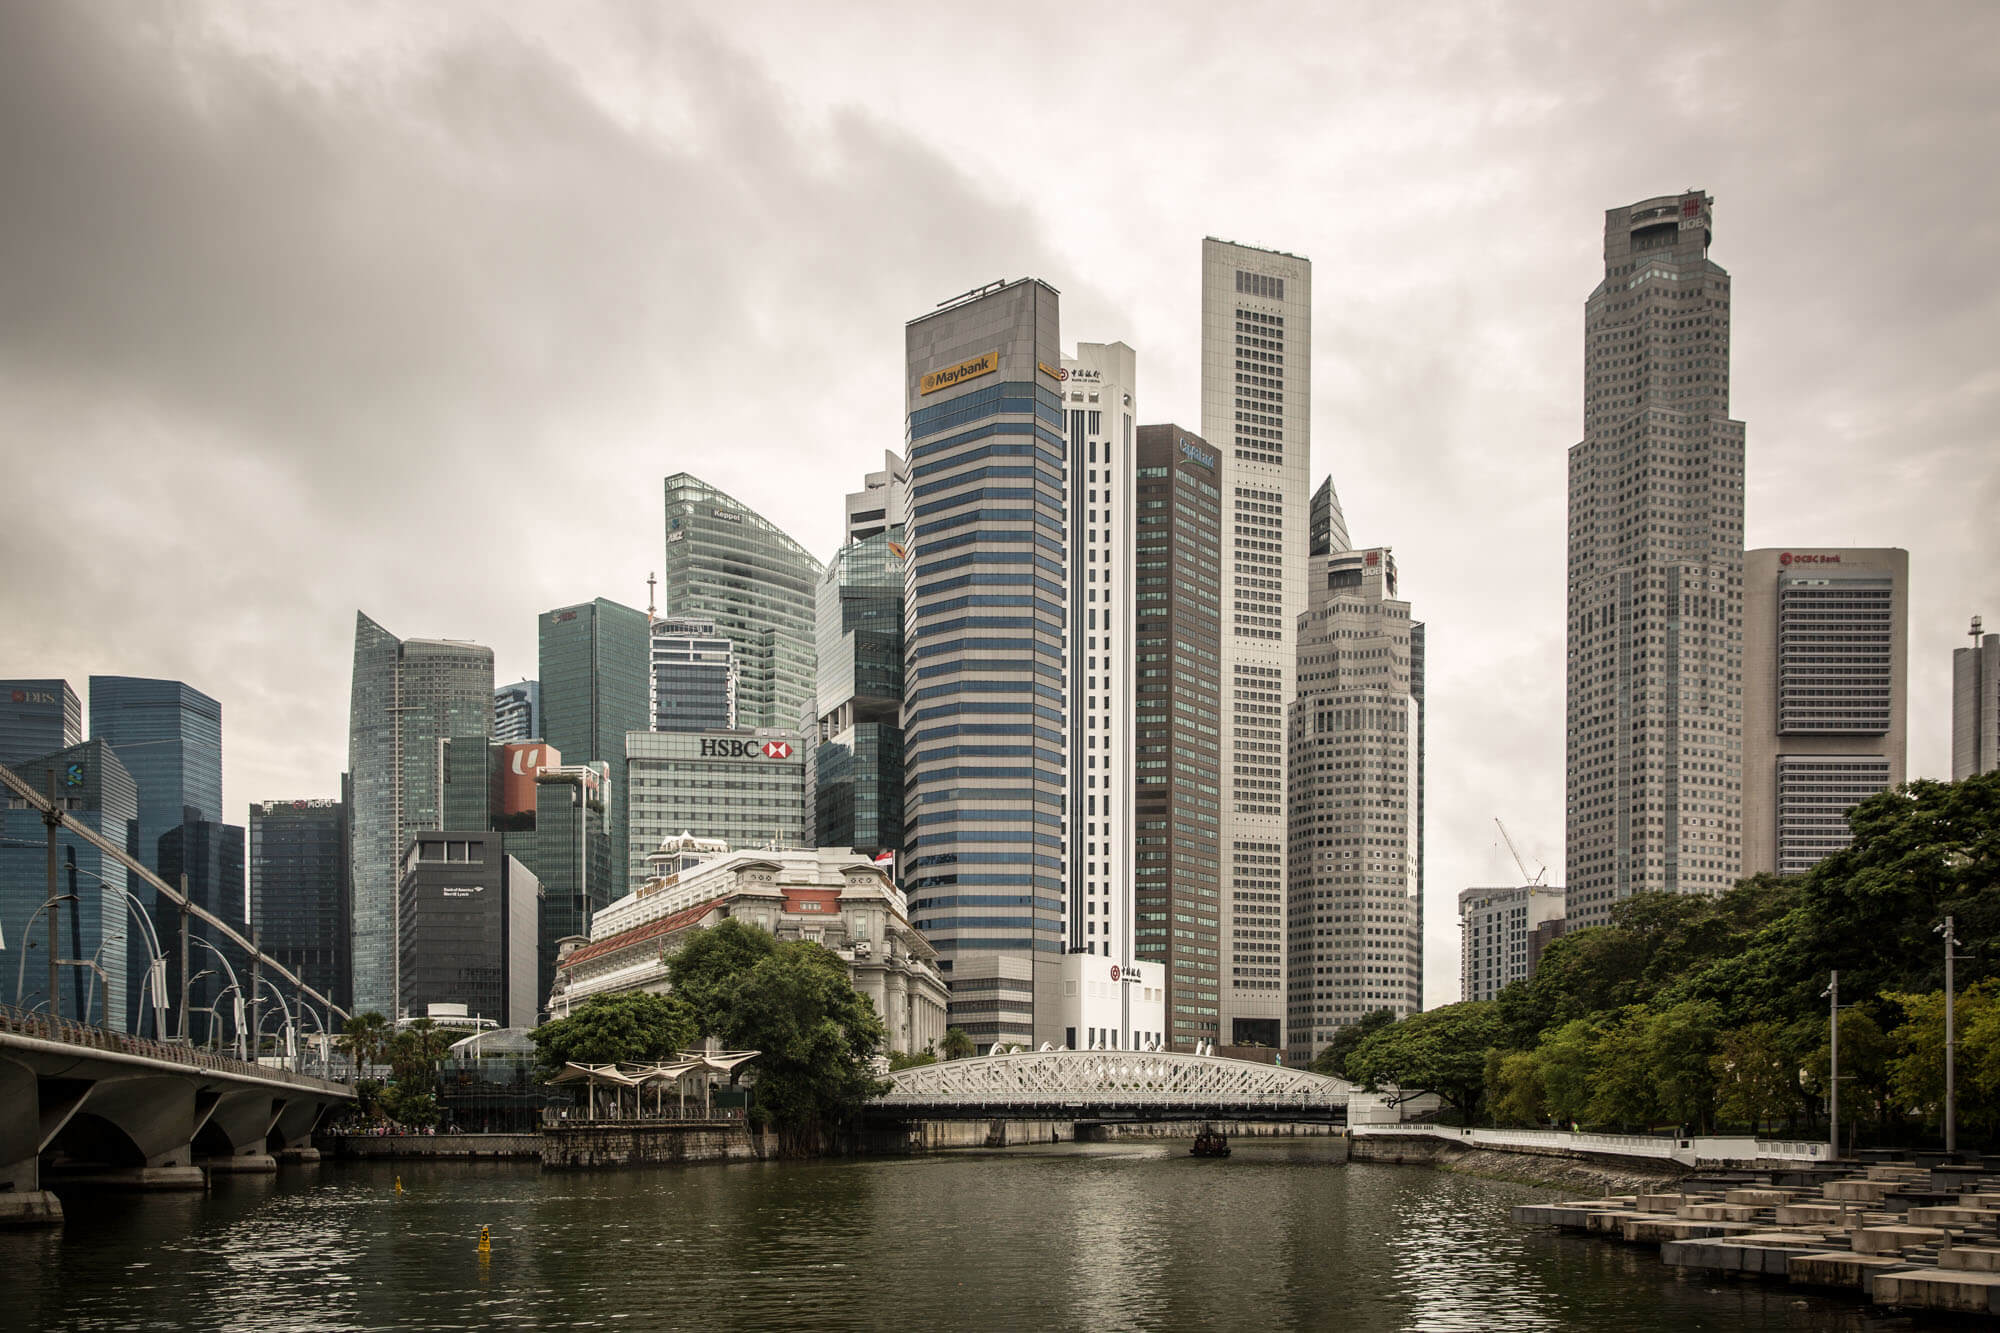 The Singapore skyline over the Marina Bay